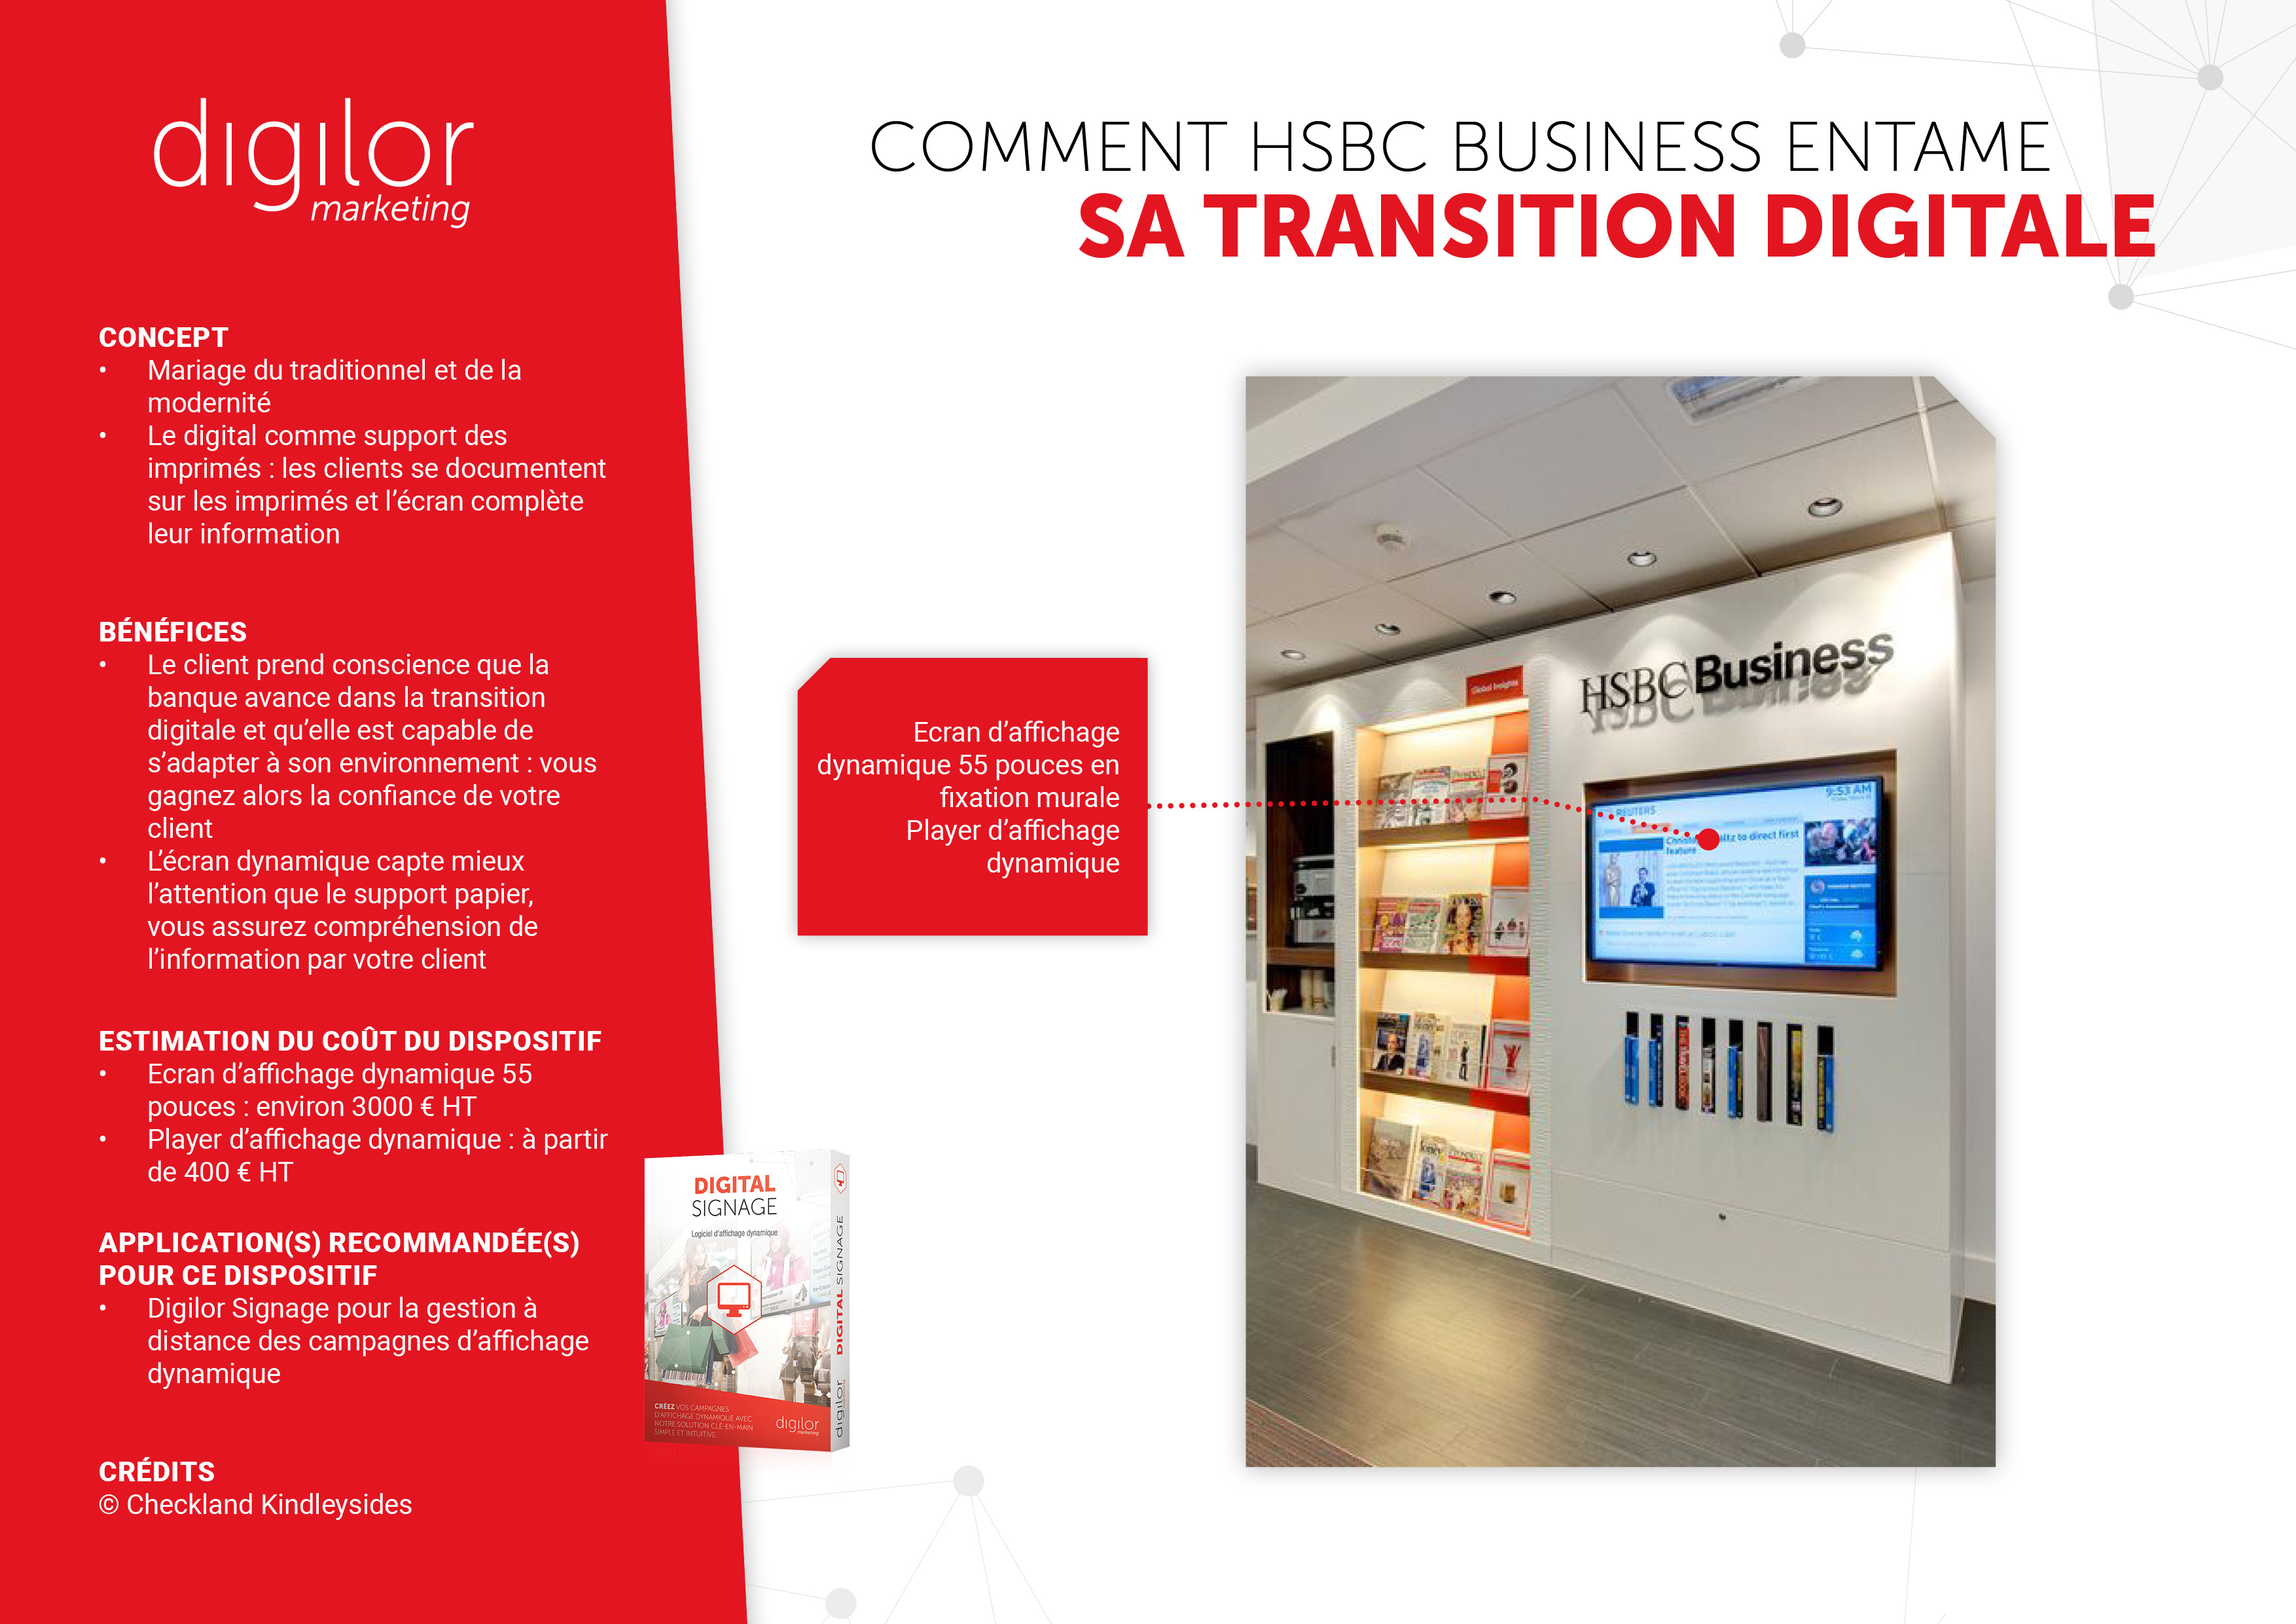 Comment HSBC Business entame sa transition digitale